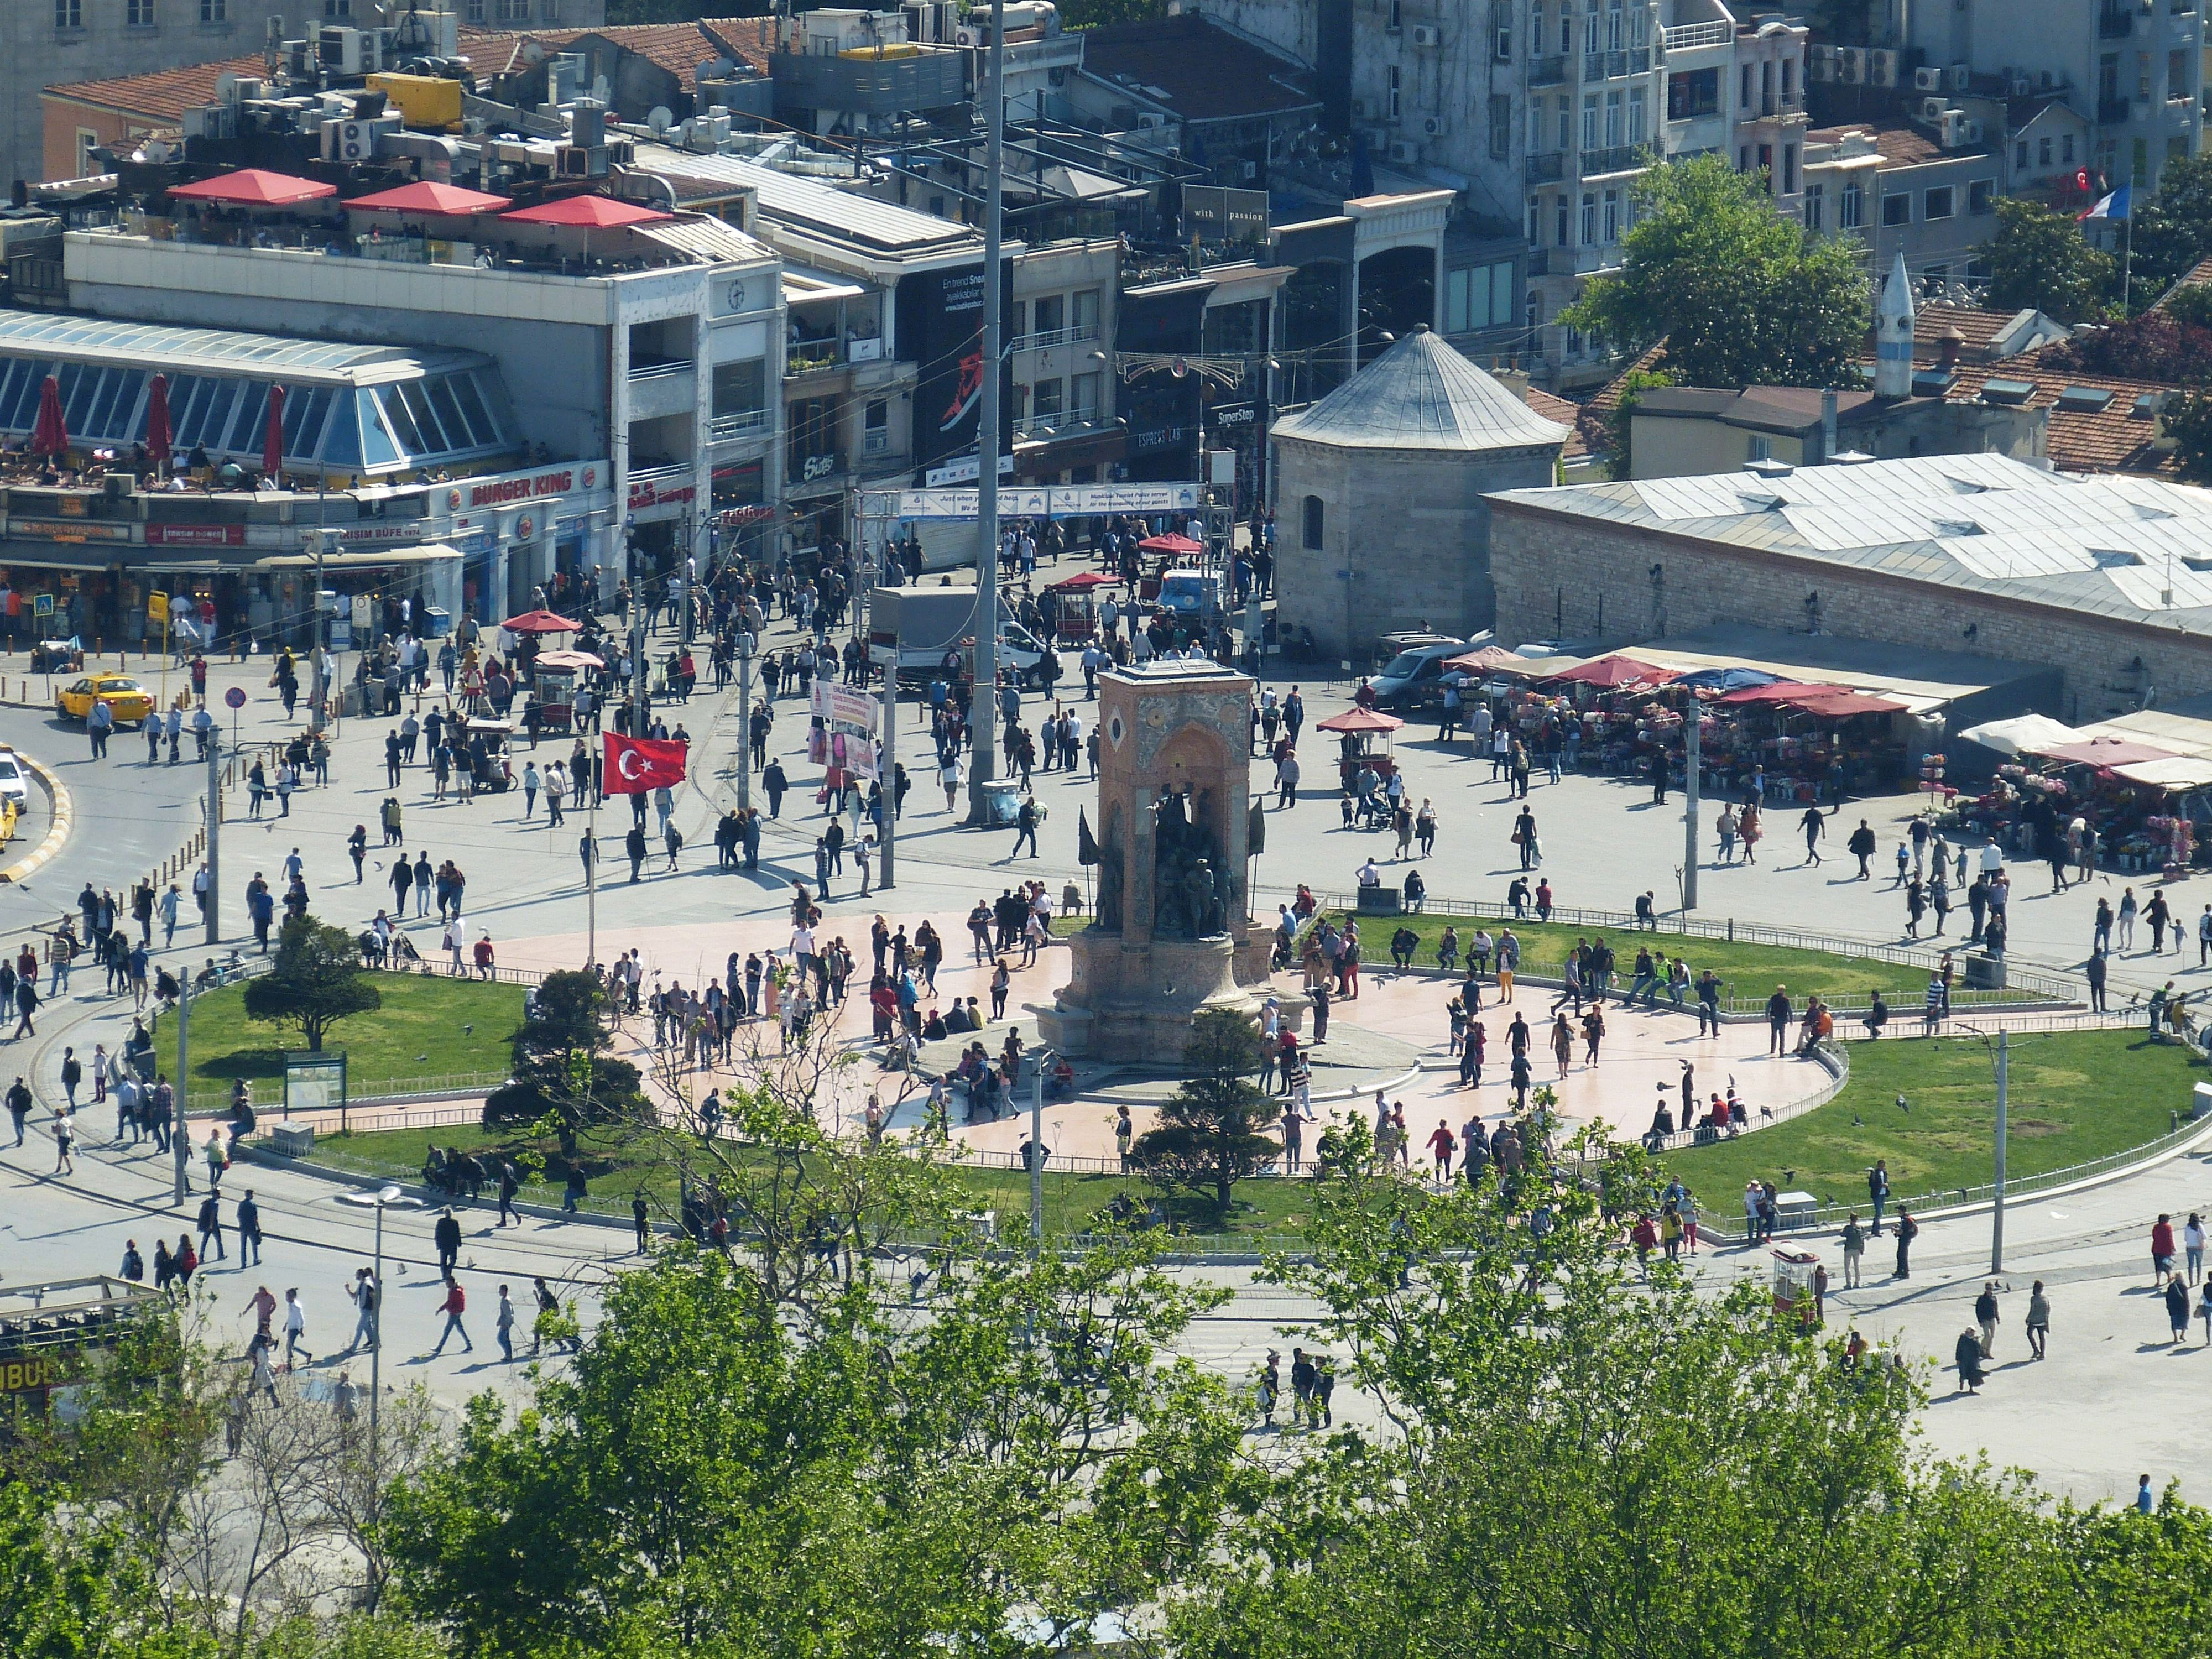 Таксимо район стамбула. Площадь Таксим в Стамбуле. Площадь Невшехир Таксим. Площадь Таксим в Стамбуле фото. Площадь Таксим Главная елка Стамбула.